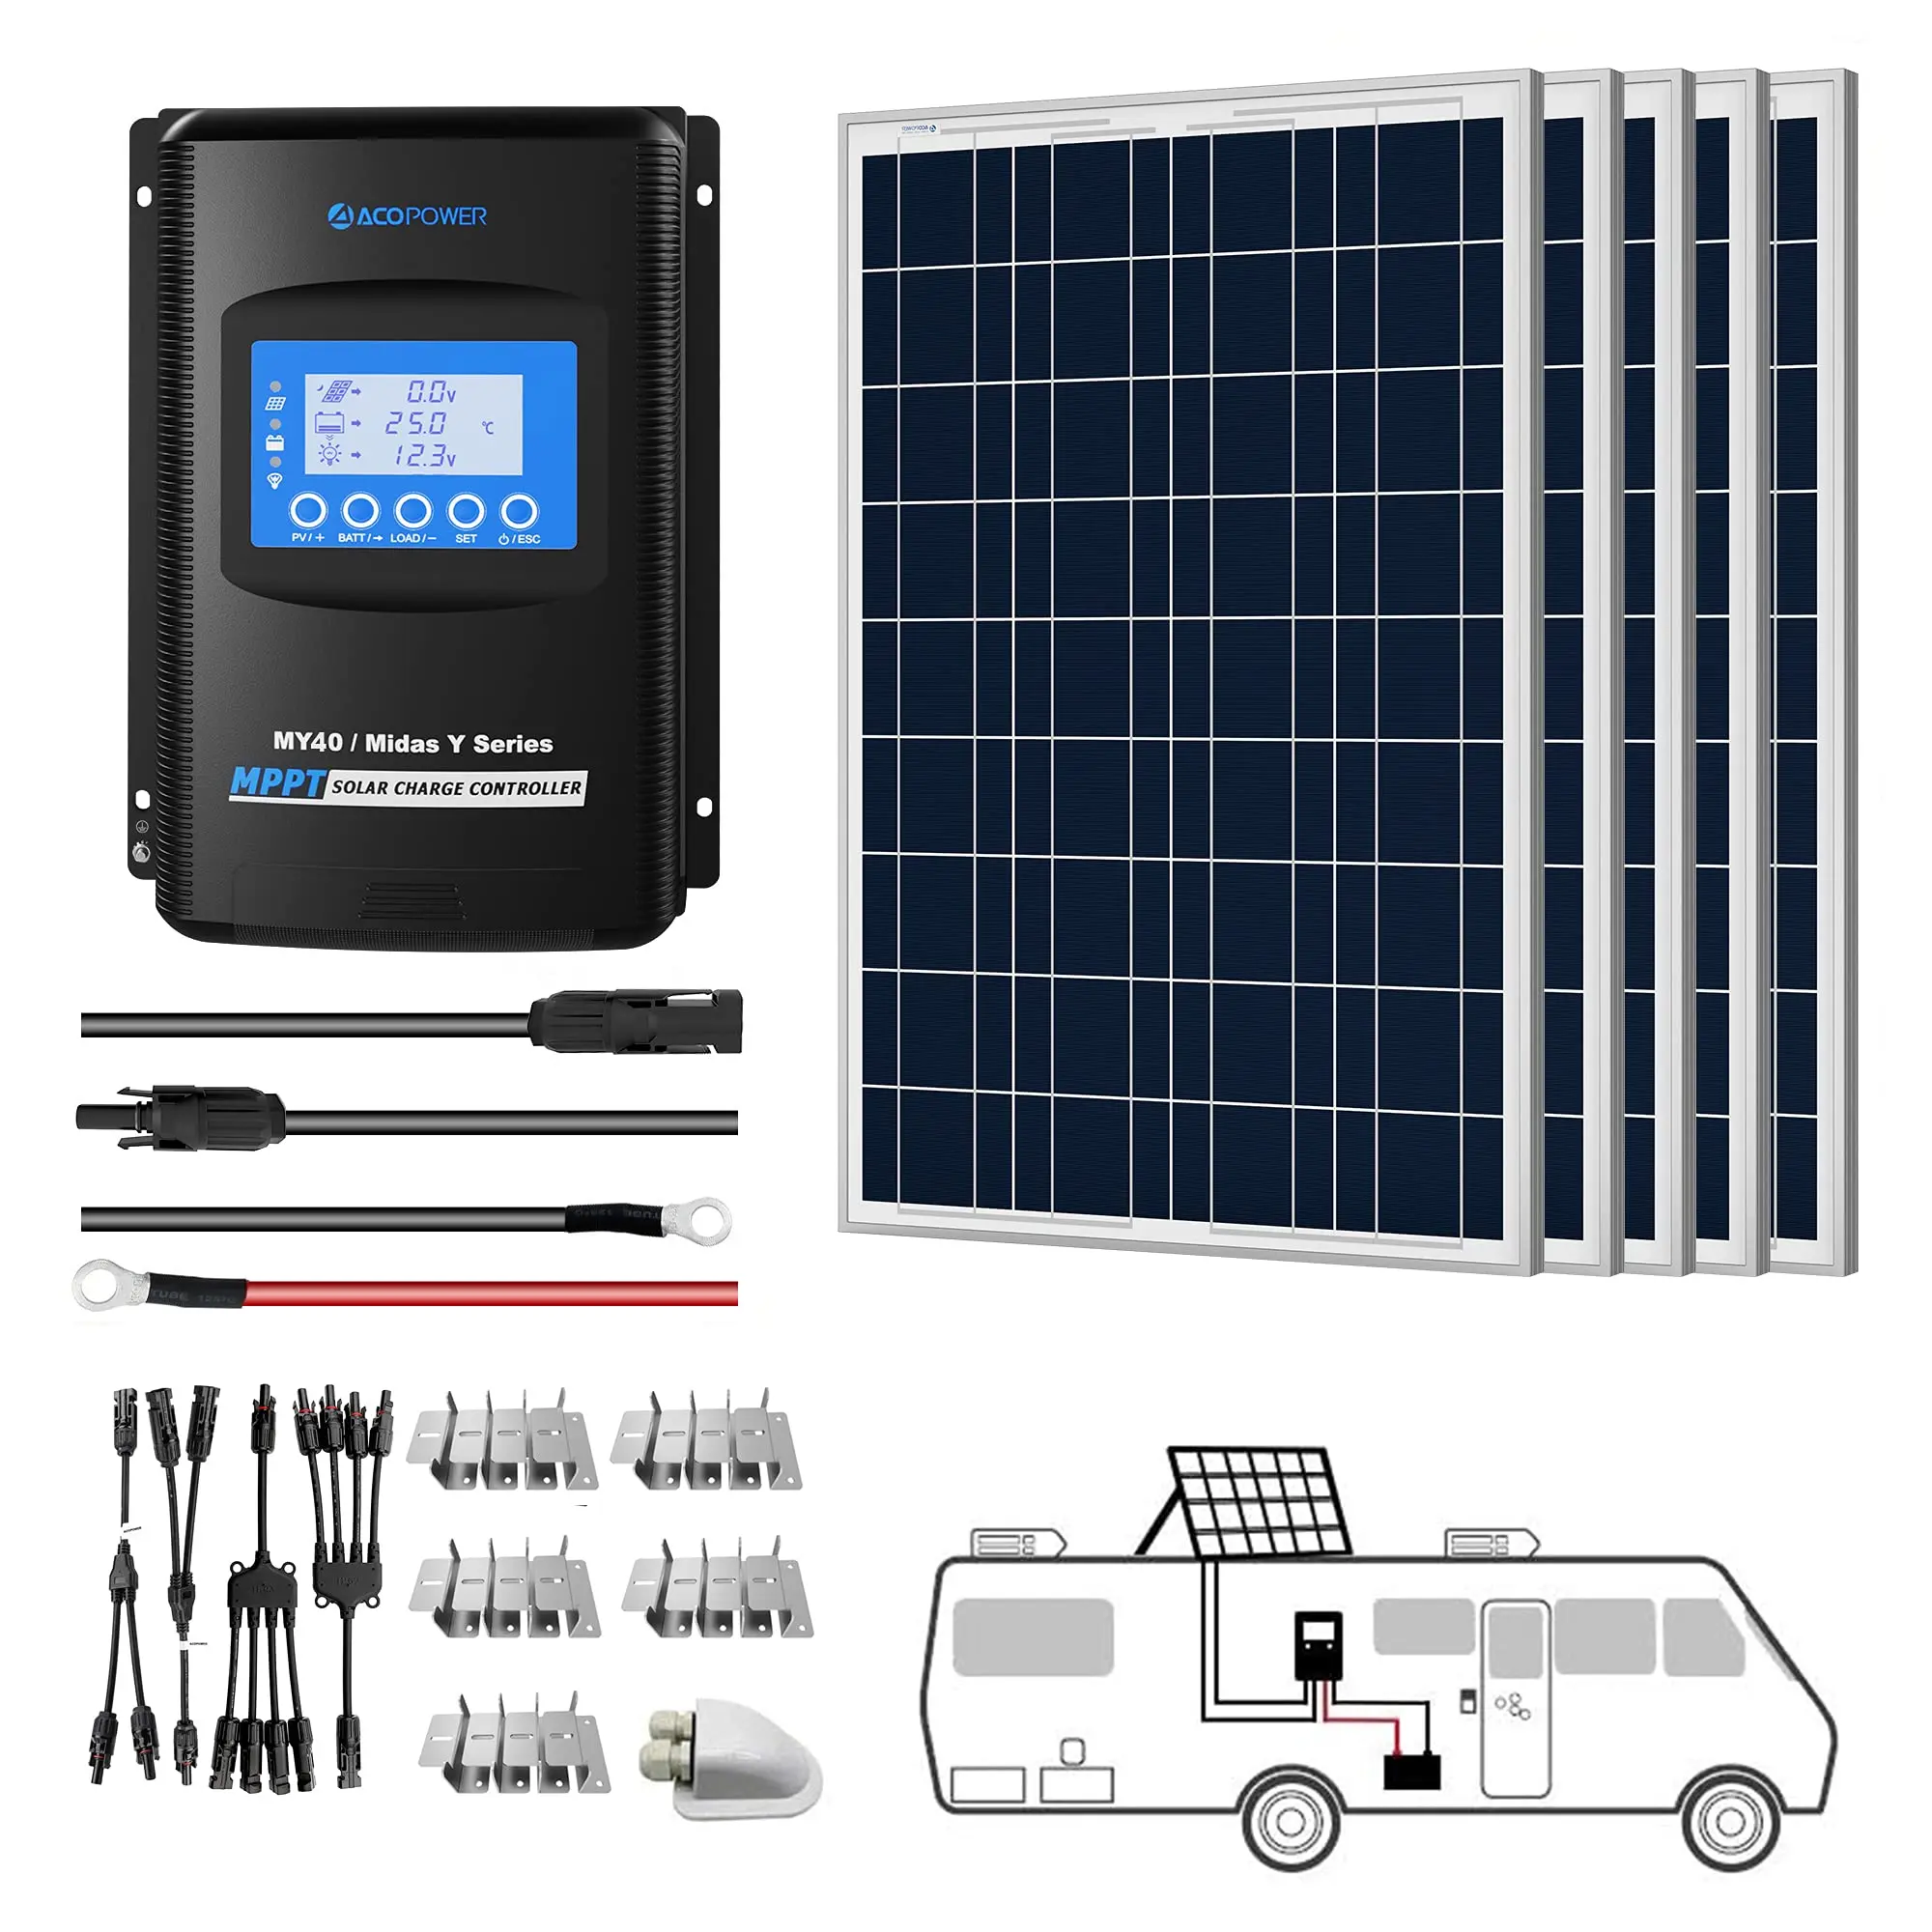 500 watt solar panel kit with inverter - What size inverter do I need for a 500 watt solar panel